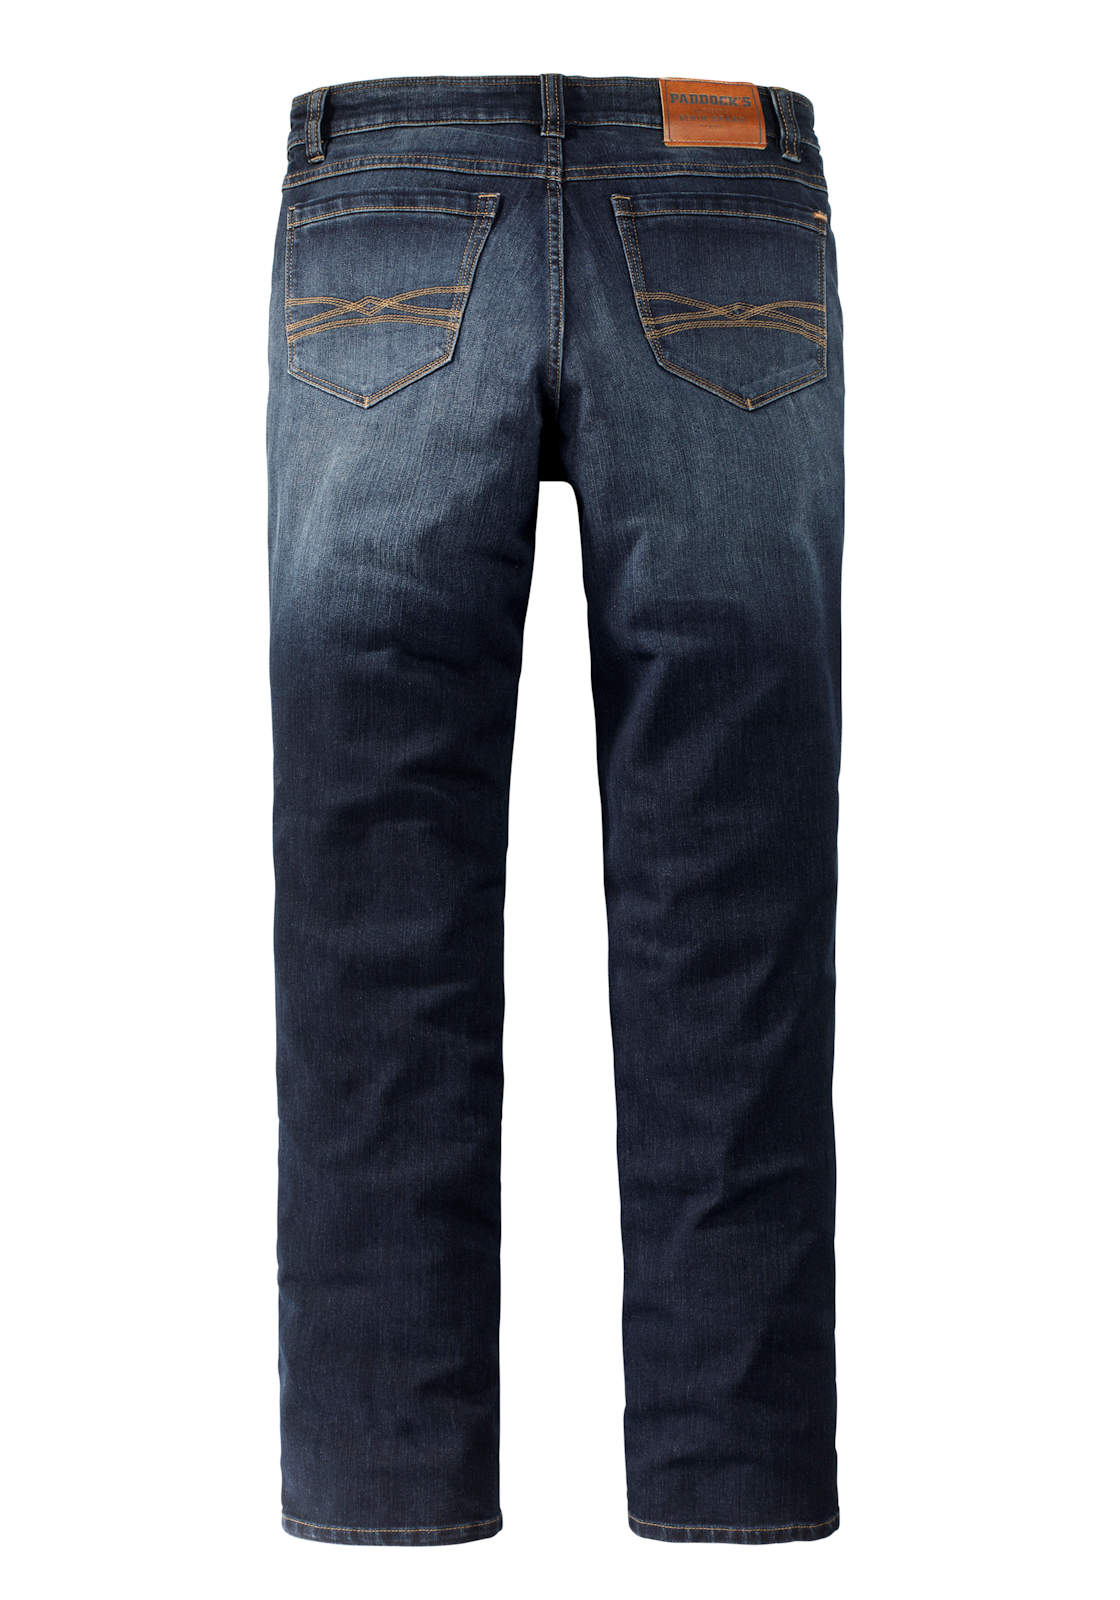 PADDOCK´S Herren Jeans RANGER PIPE Regular Fit 80139 Hose Denim Weite 30-46 